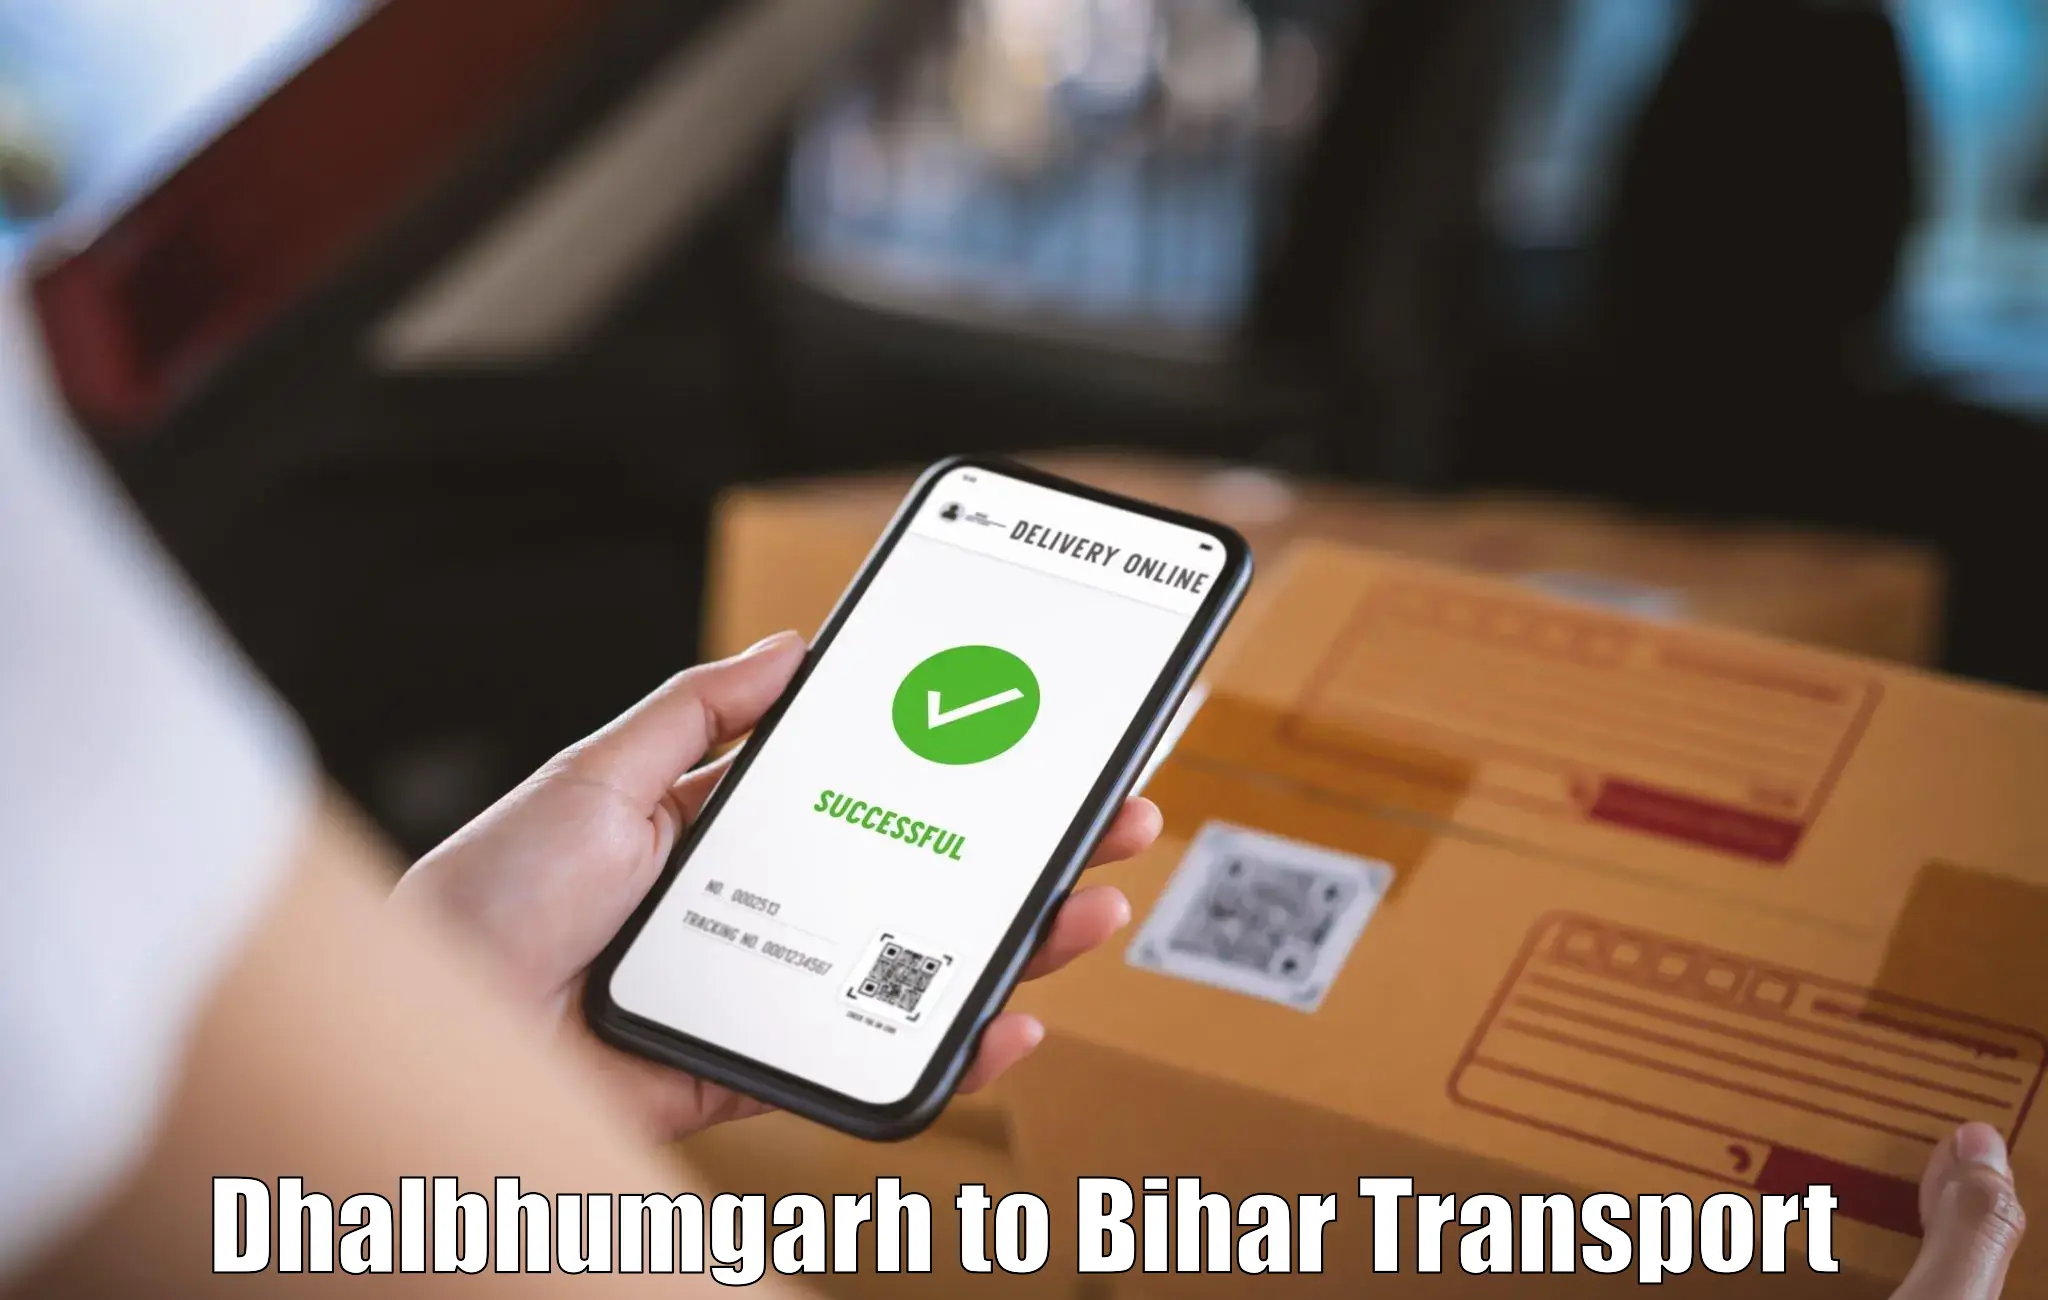 Daily transport service Dhalbhumgarh to Bihar